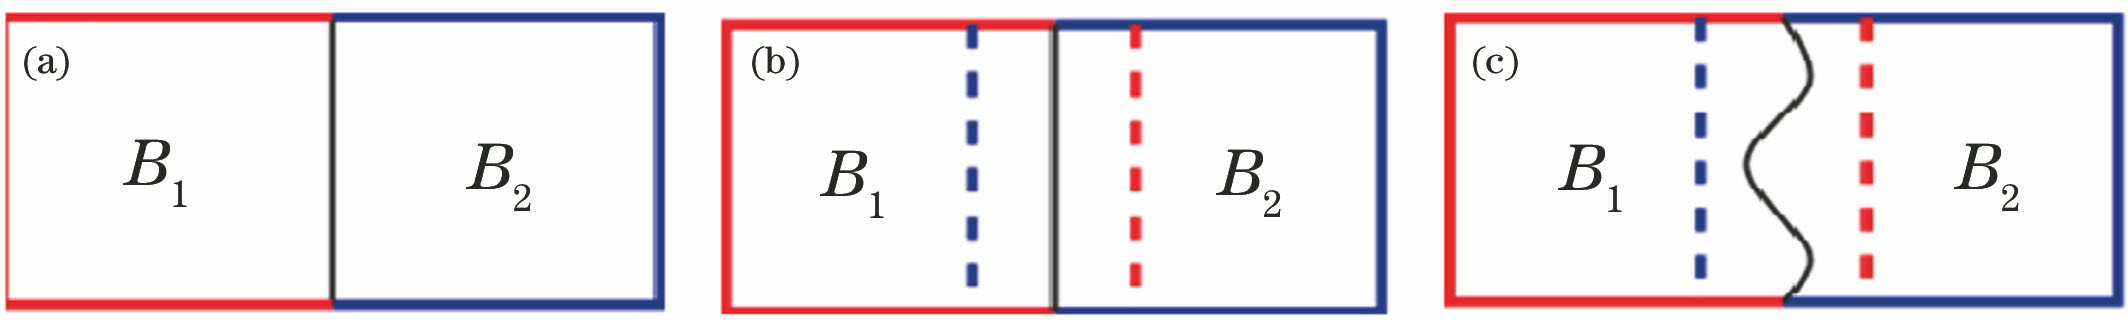 Comparison of the minimum error path. (a) Random of placement blocks; (b) constrained by overlap of neighboring blocks; (c) boundary cut of minimum error